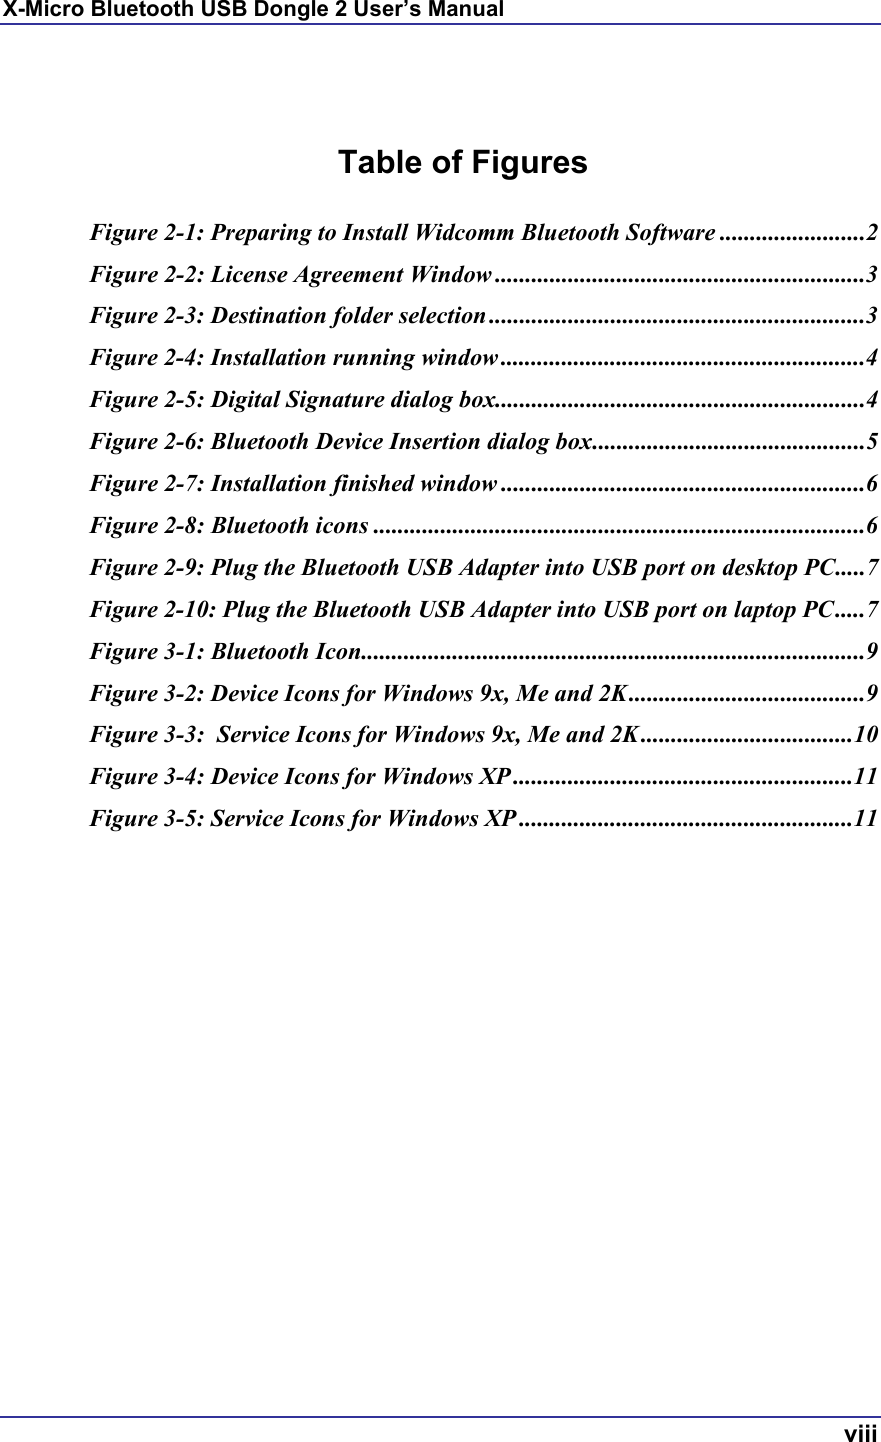 X-Micro Bluetooth USB Dongle 2 User’s Manual  viii   Table of Figures  Figure 2-1: Preparing to Install Widcomm Bluetooth Software ........................2 Figure 2-2: License Agreement Window .............................................................3 Figure 2-3: Destination folder selection ..............................................................3 Figure 2-4: Installation running window ............................................................4 Figure 2-5: Digital Signature dialog box.............................................................4 Figure 2-6: Bluetooth Device Insertion dialog box.............................................5 Figure 2-7: Installation finished window ............................................................6 Figure 2-8: Bluetooth icons .................................................................................6 Figure 2-9: Plug the Bluetooth USB Adapter into USB port on desktop PC.....7 Figure 2-10: Plug the Bluetooth USB Adapter into USB port on laptop PC.....7 Figure 3-1: Bluetooth Icon...................................................................................9 Figure 3-2: Device Icons for Windows 9x, Me and 2K.......................................9 Figure 3-3:  Service Icons for Windows 9x, Me and 2K ...................................10 Figure 3-4: Device Icons for Windows XP ........................................................11 Figure 3-5: Service Icons for Windows XP .......................................................11   